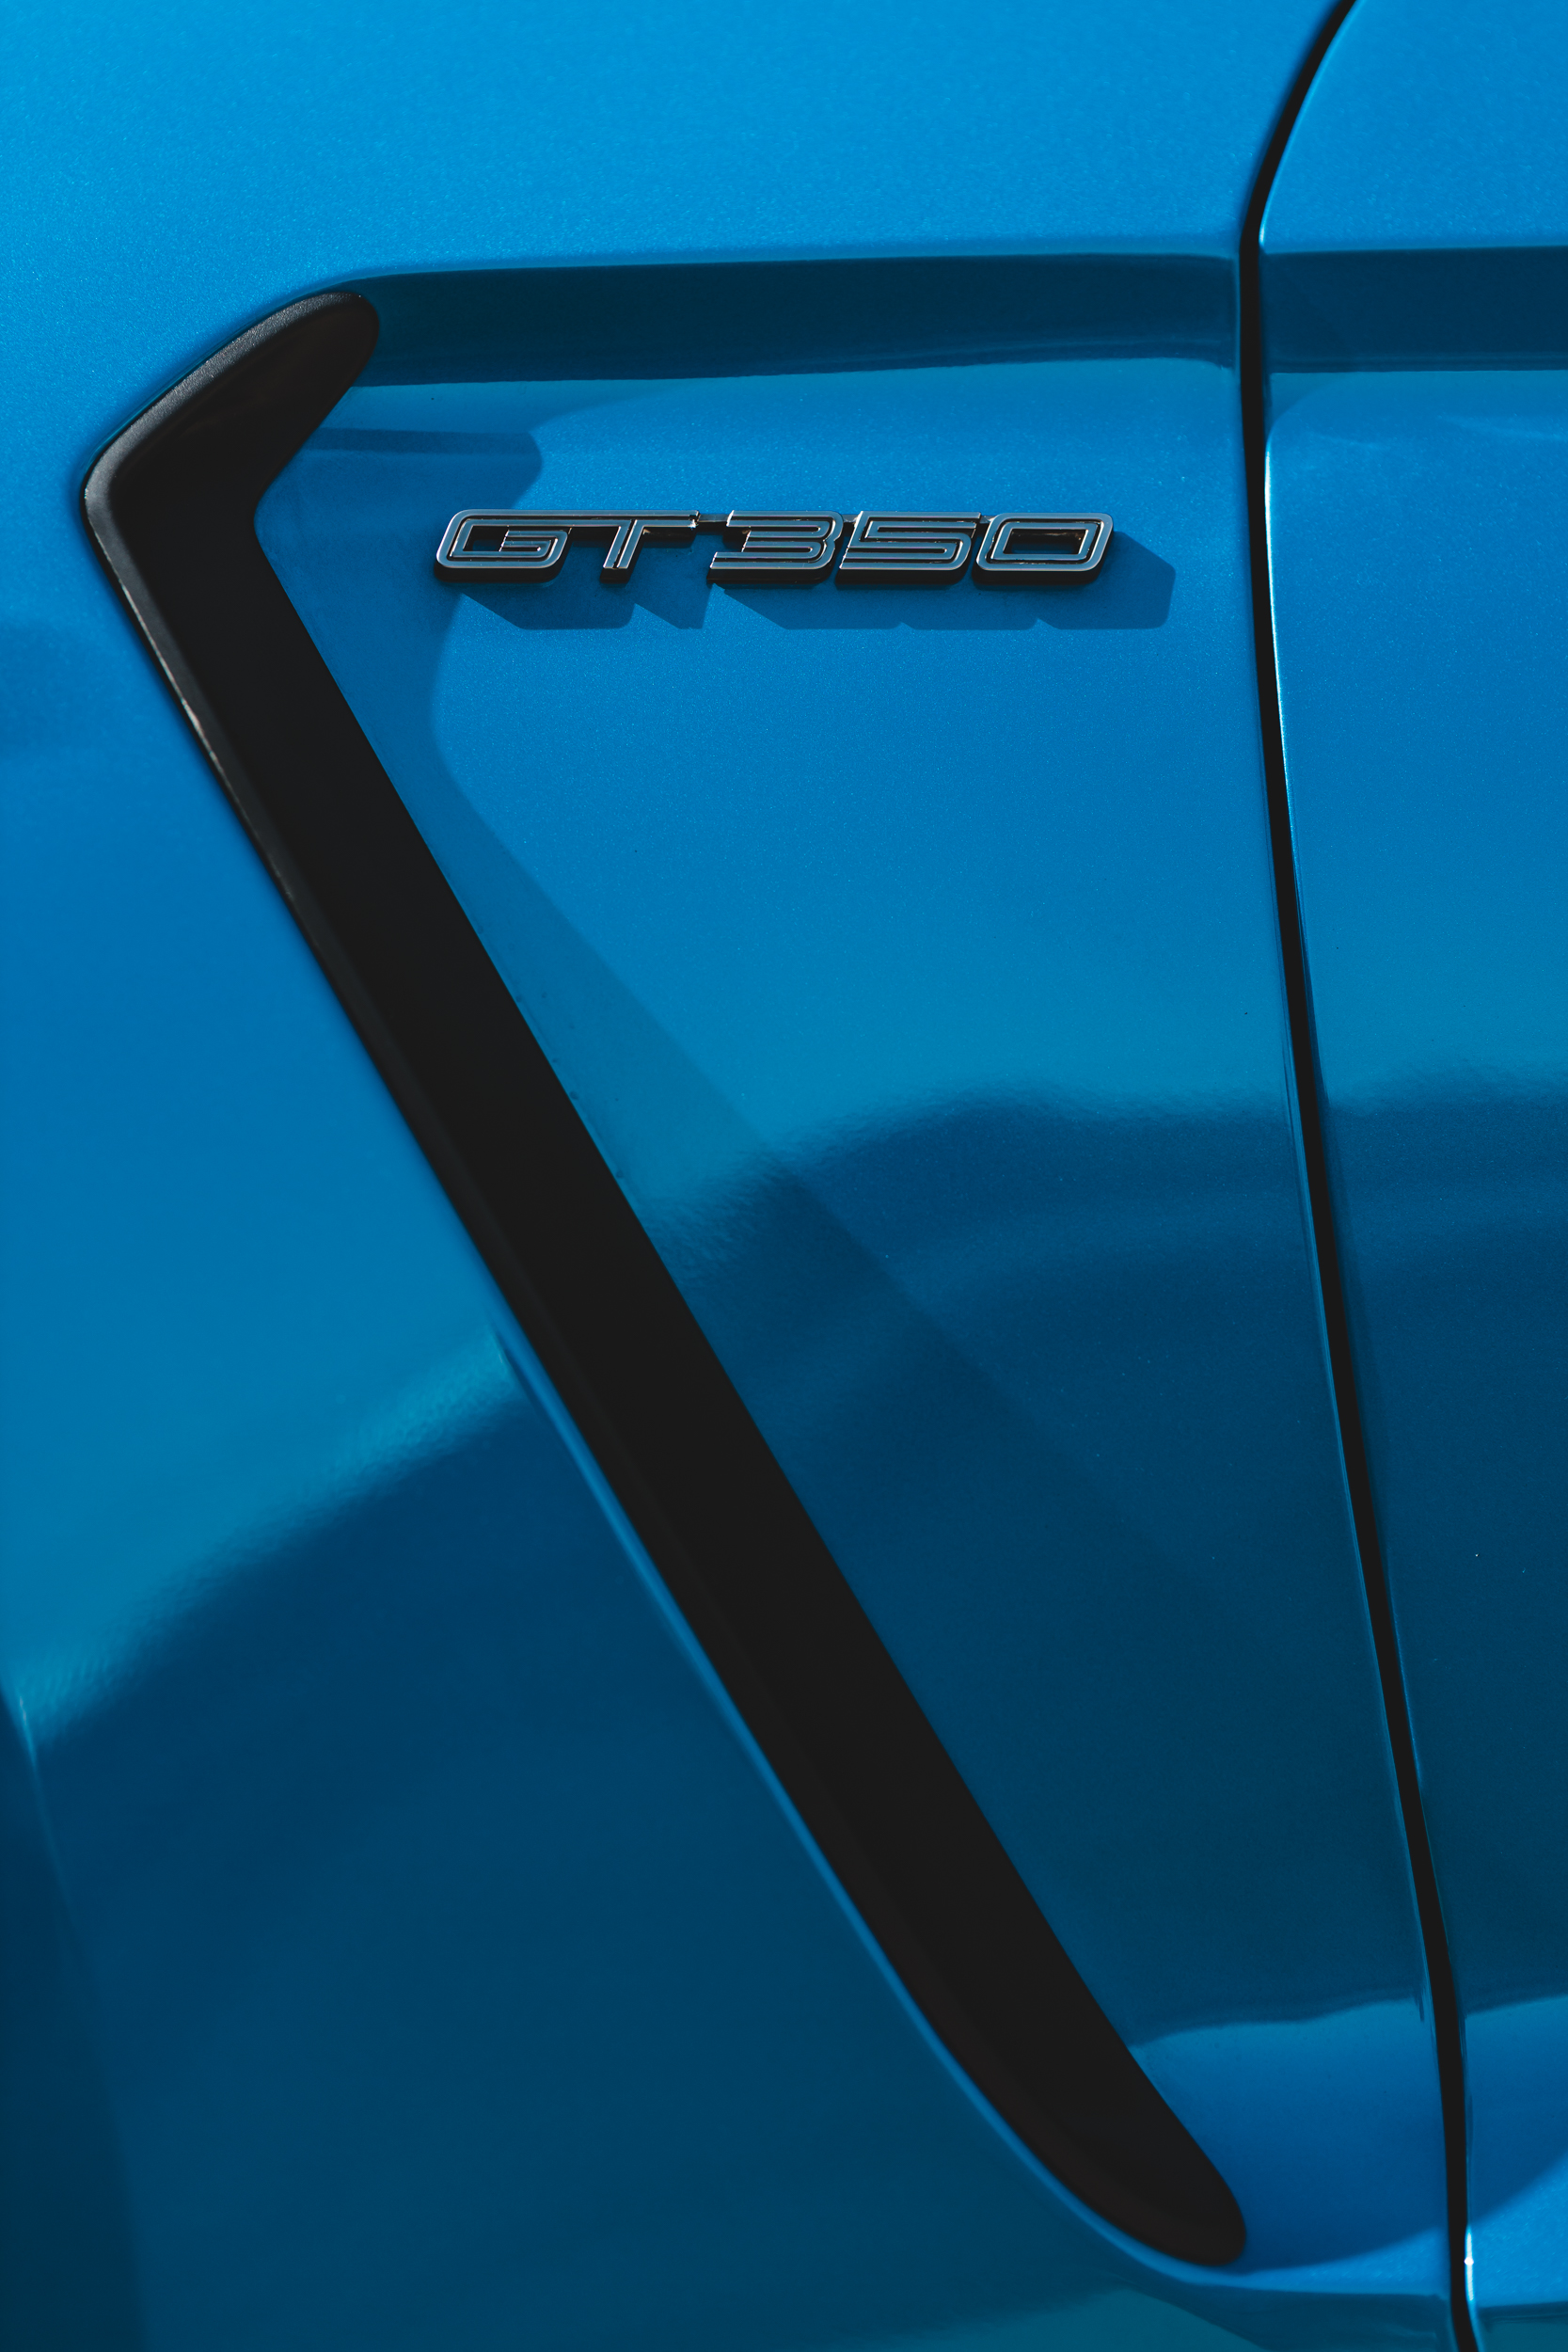 Freshly detailed and ceramic coated GT350 logo